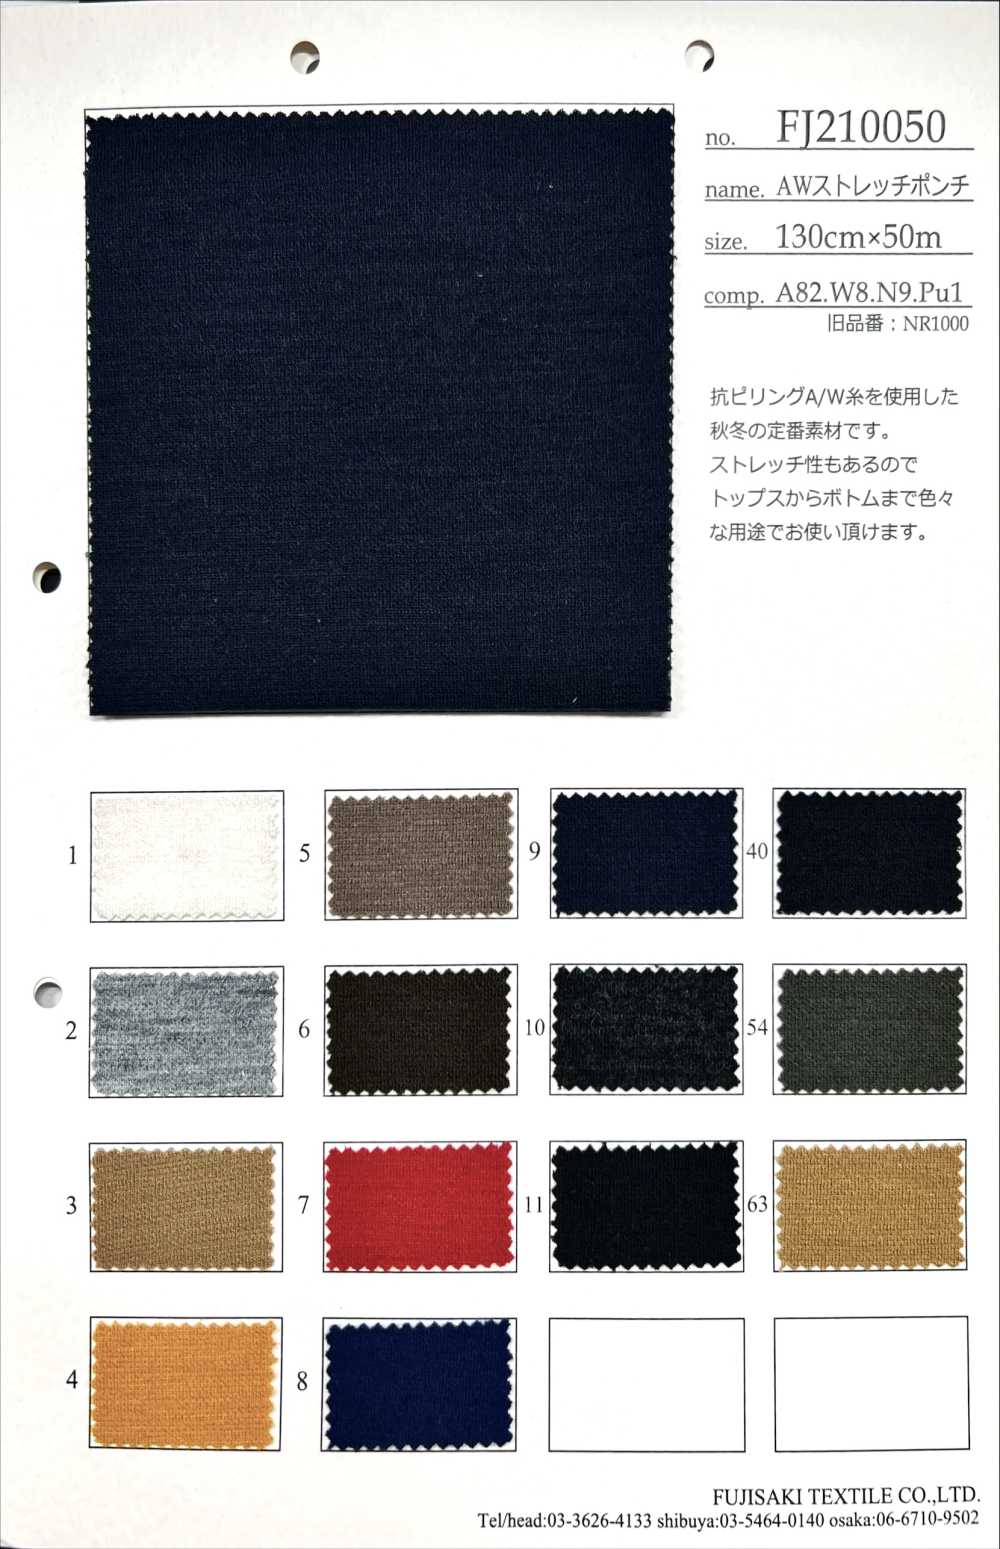 FJ210050 AW拉伸双罗纹针织[面料] Fujisaki Textile